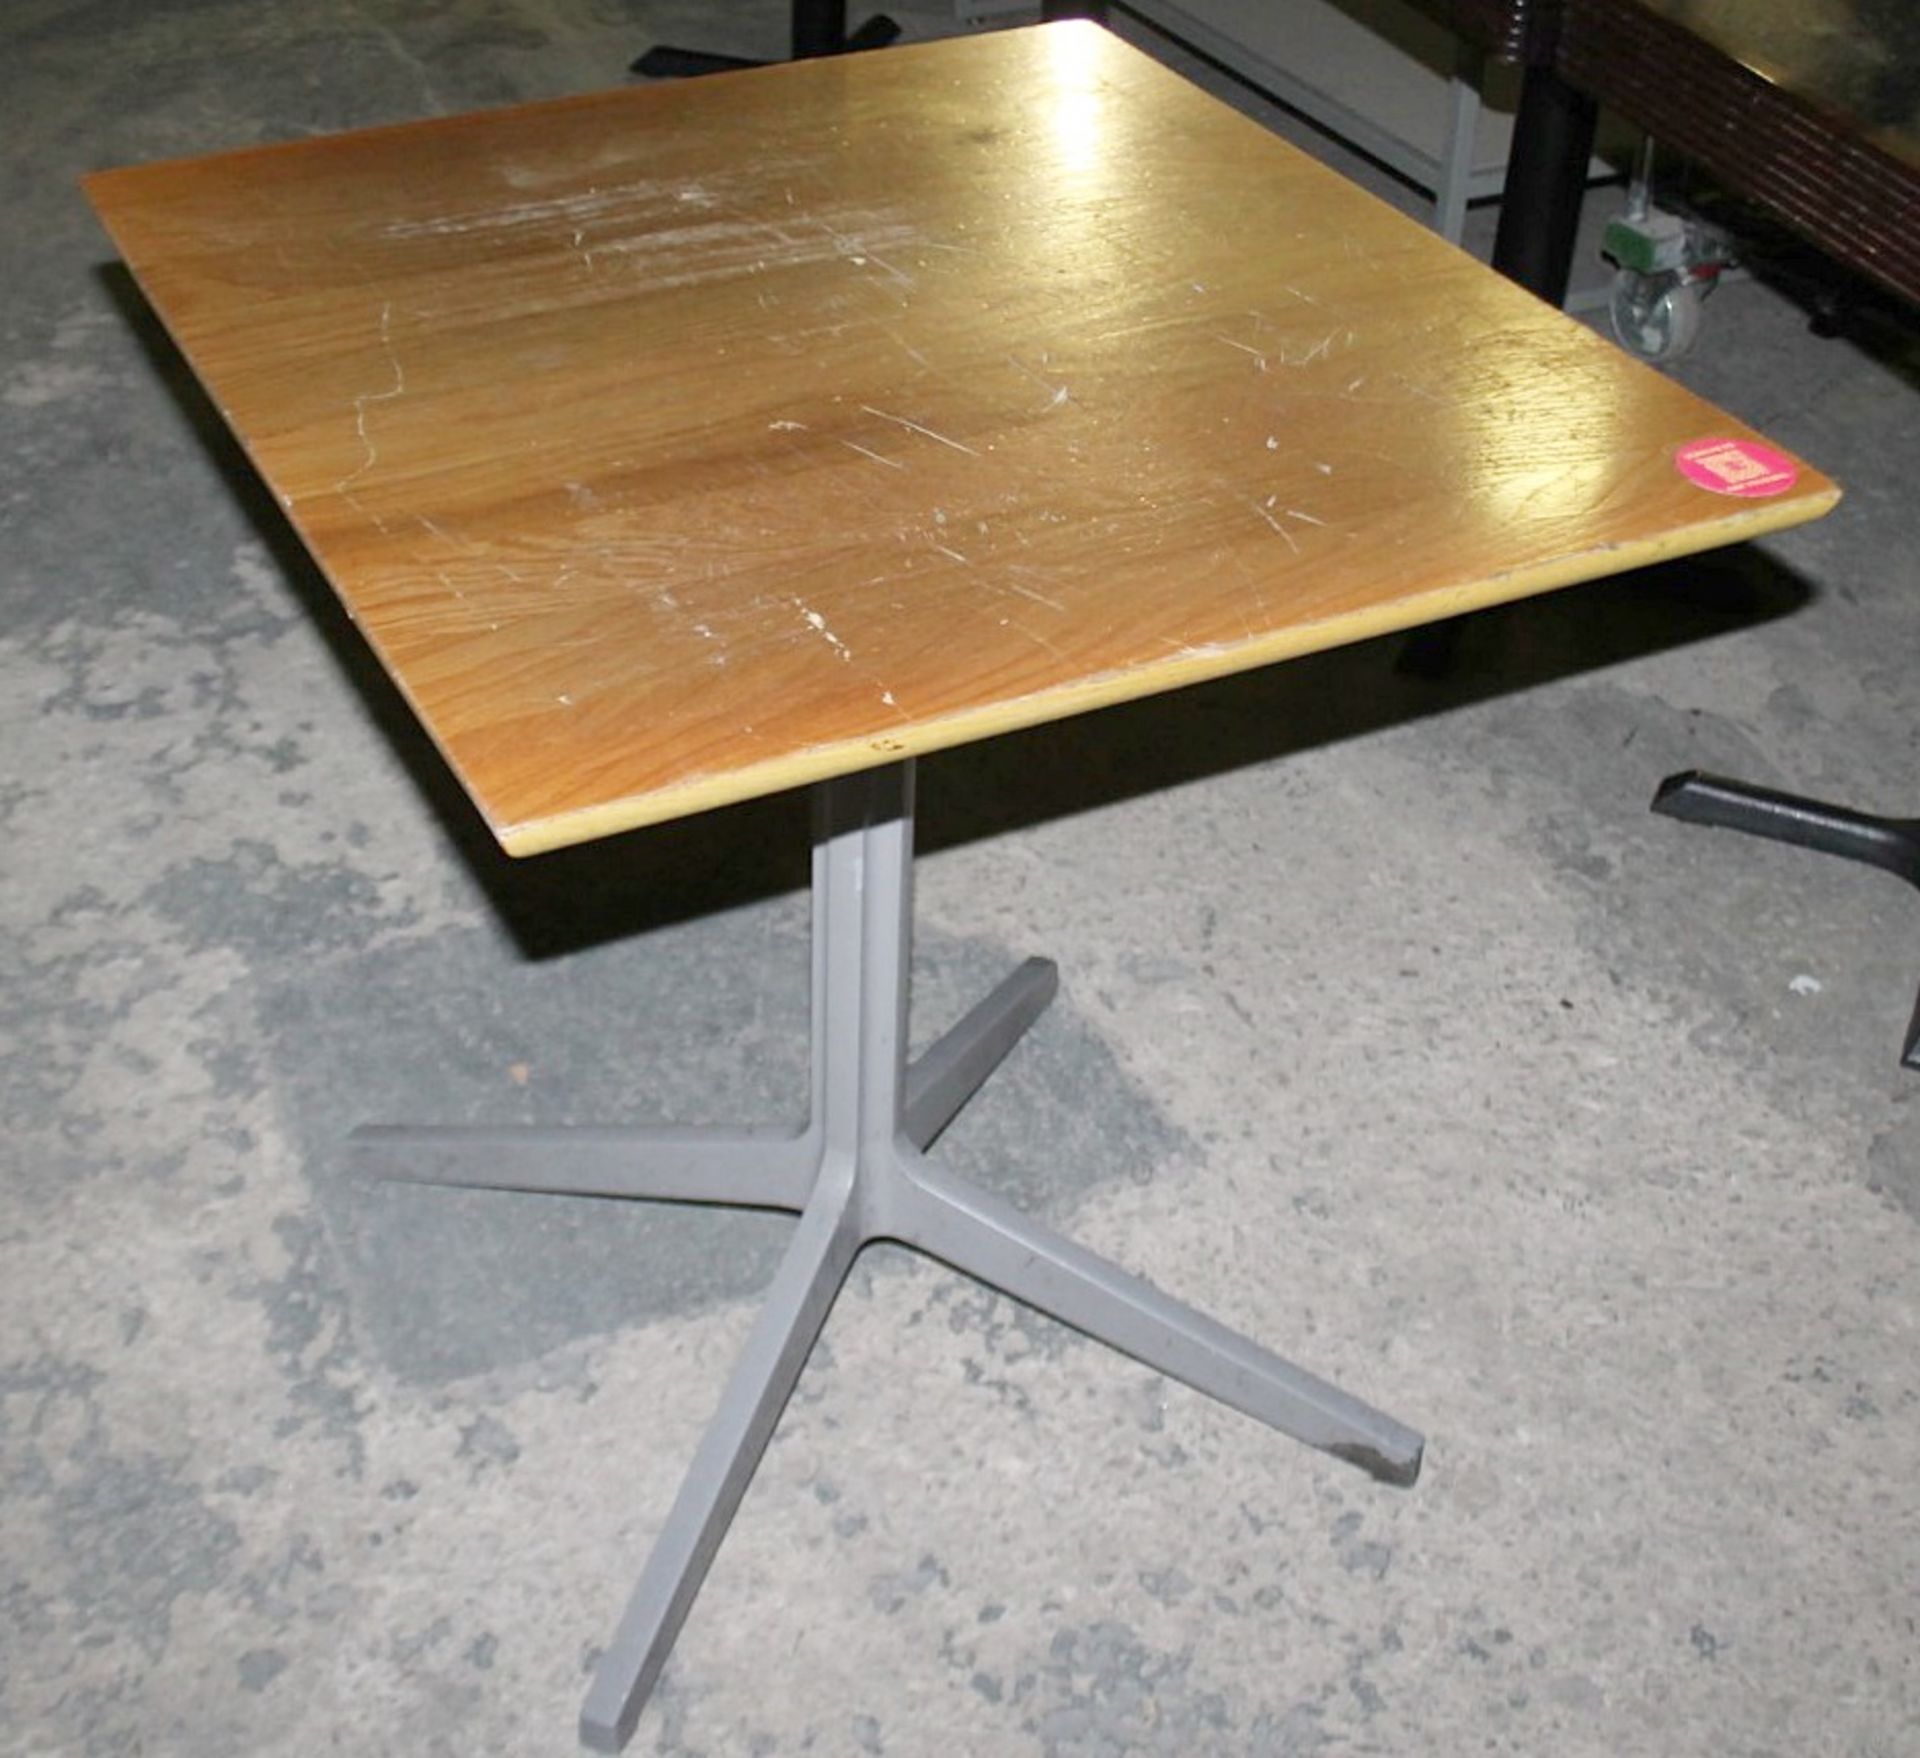 1 x Rustic Square Restaurant Table - Dimensions: H75 x W74 x D70cm - Ref: GEN710